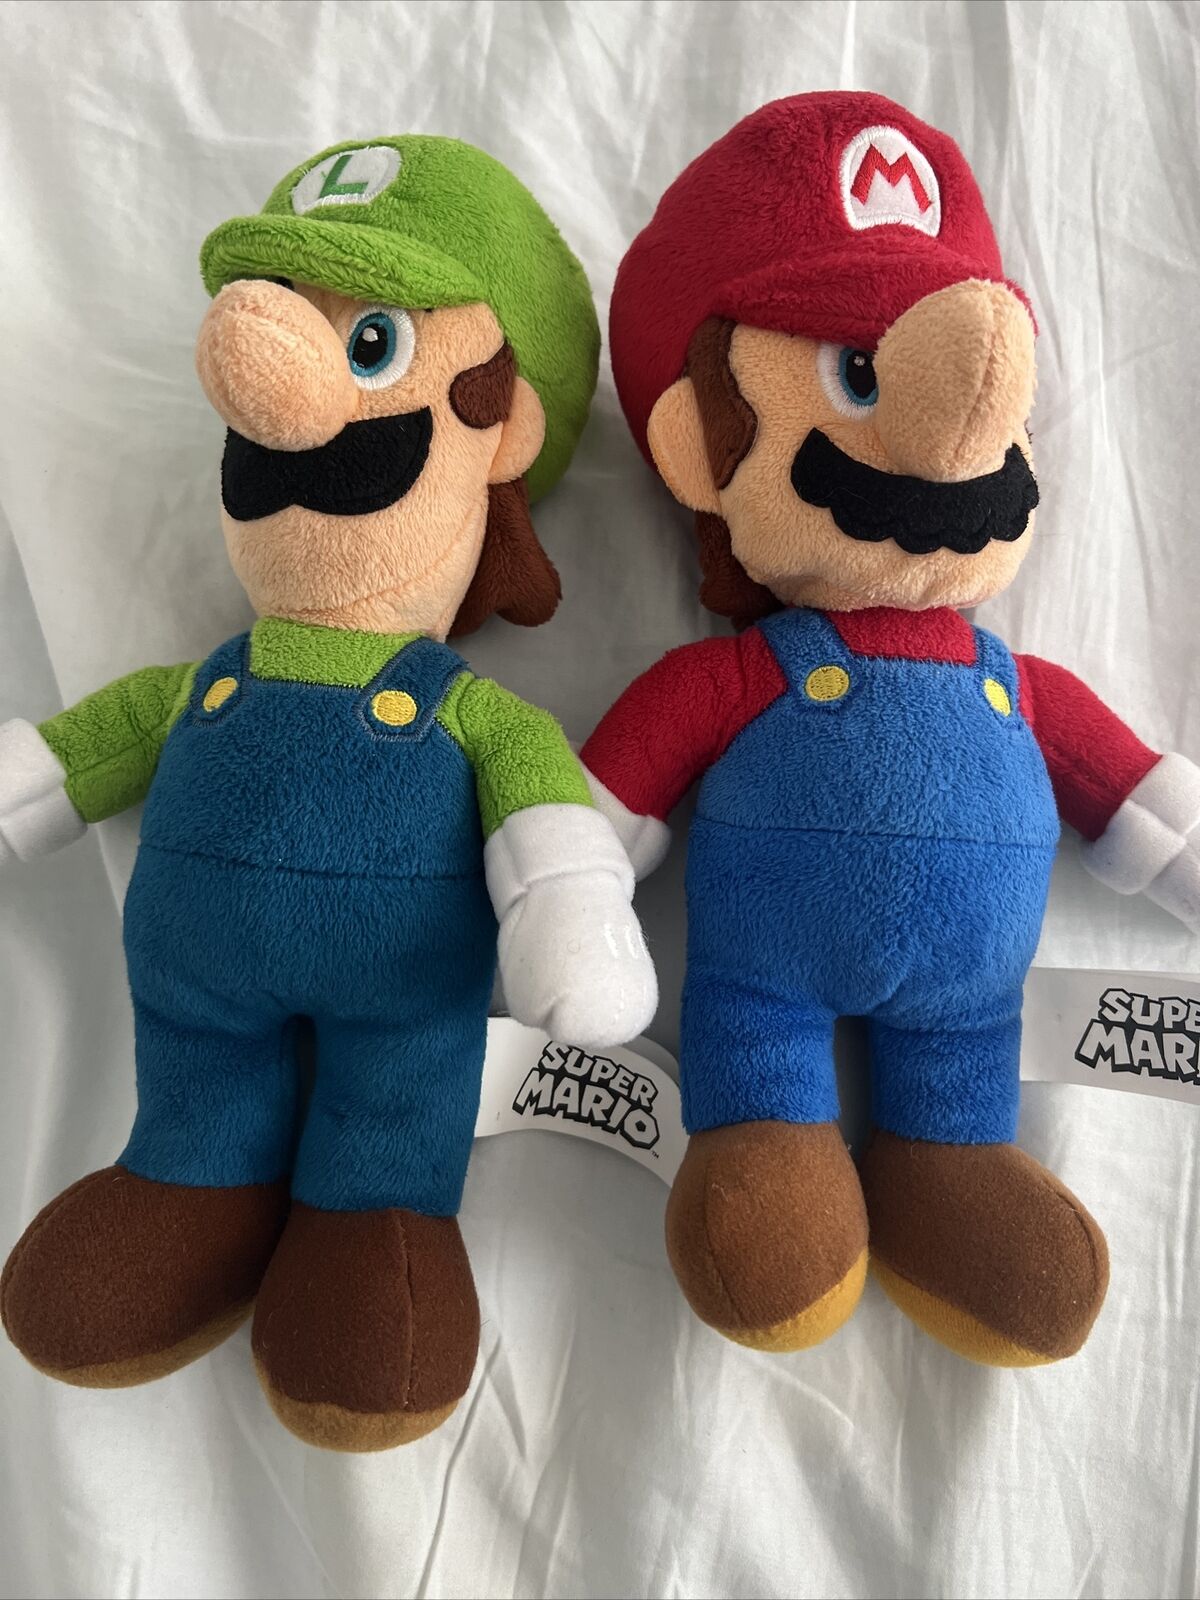 Super Mario Bros Mario and Luigi Plush Toys 8”